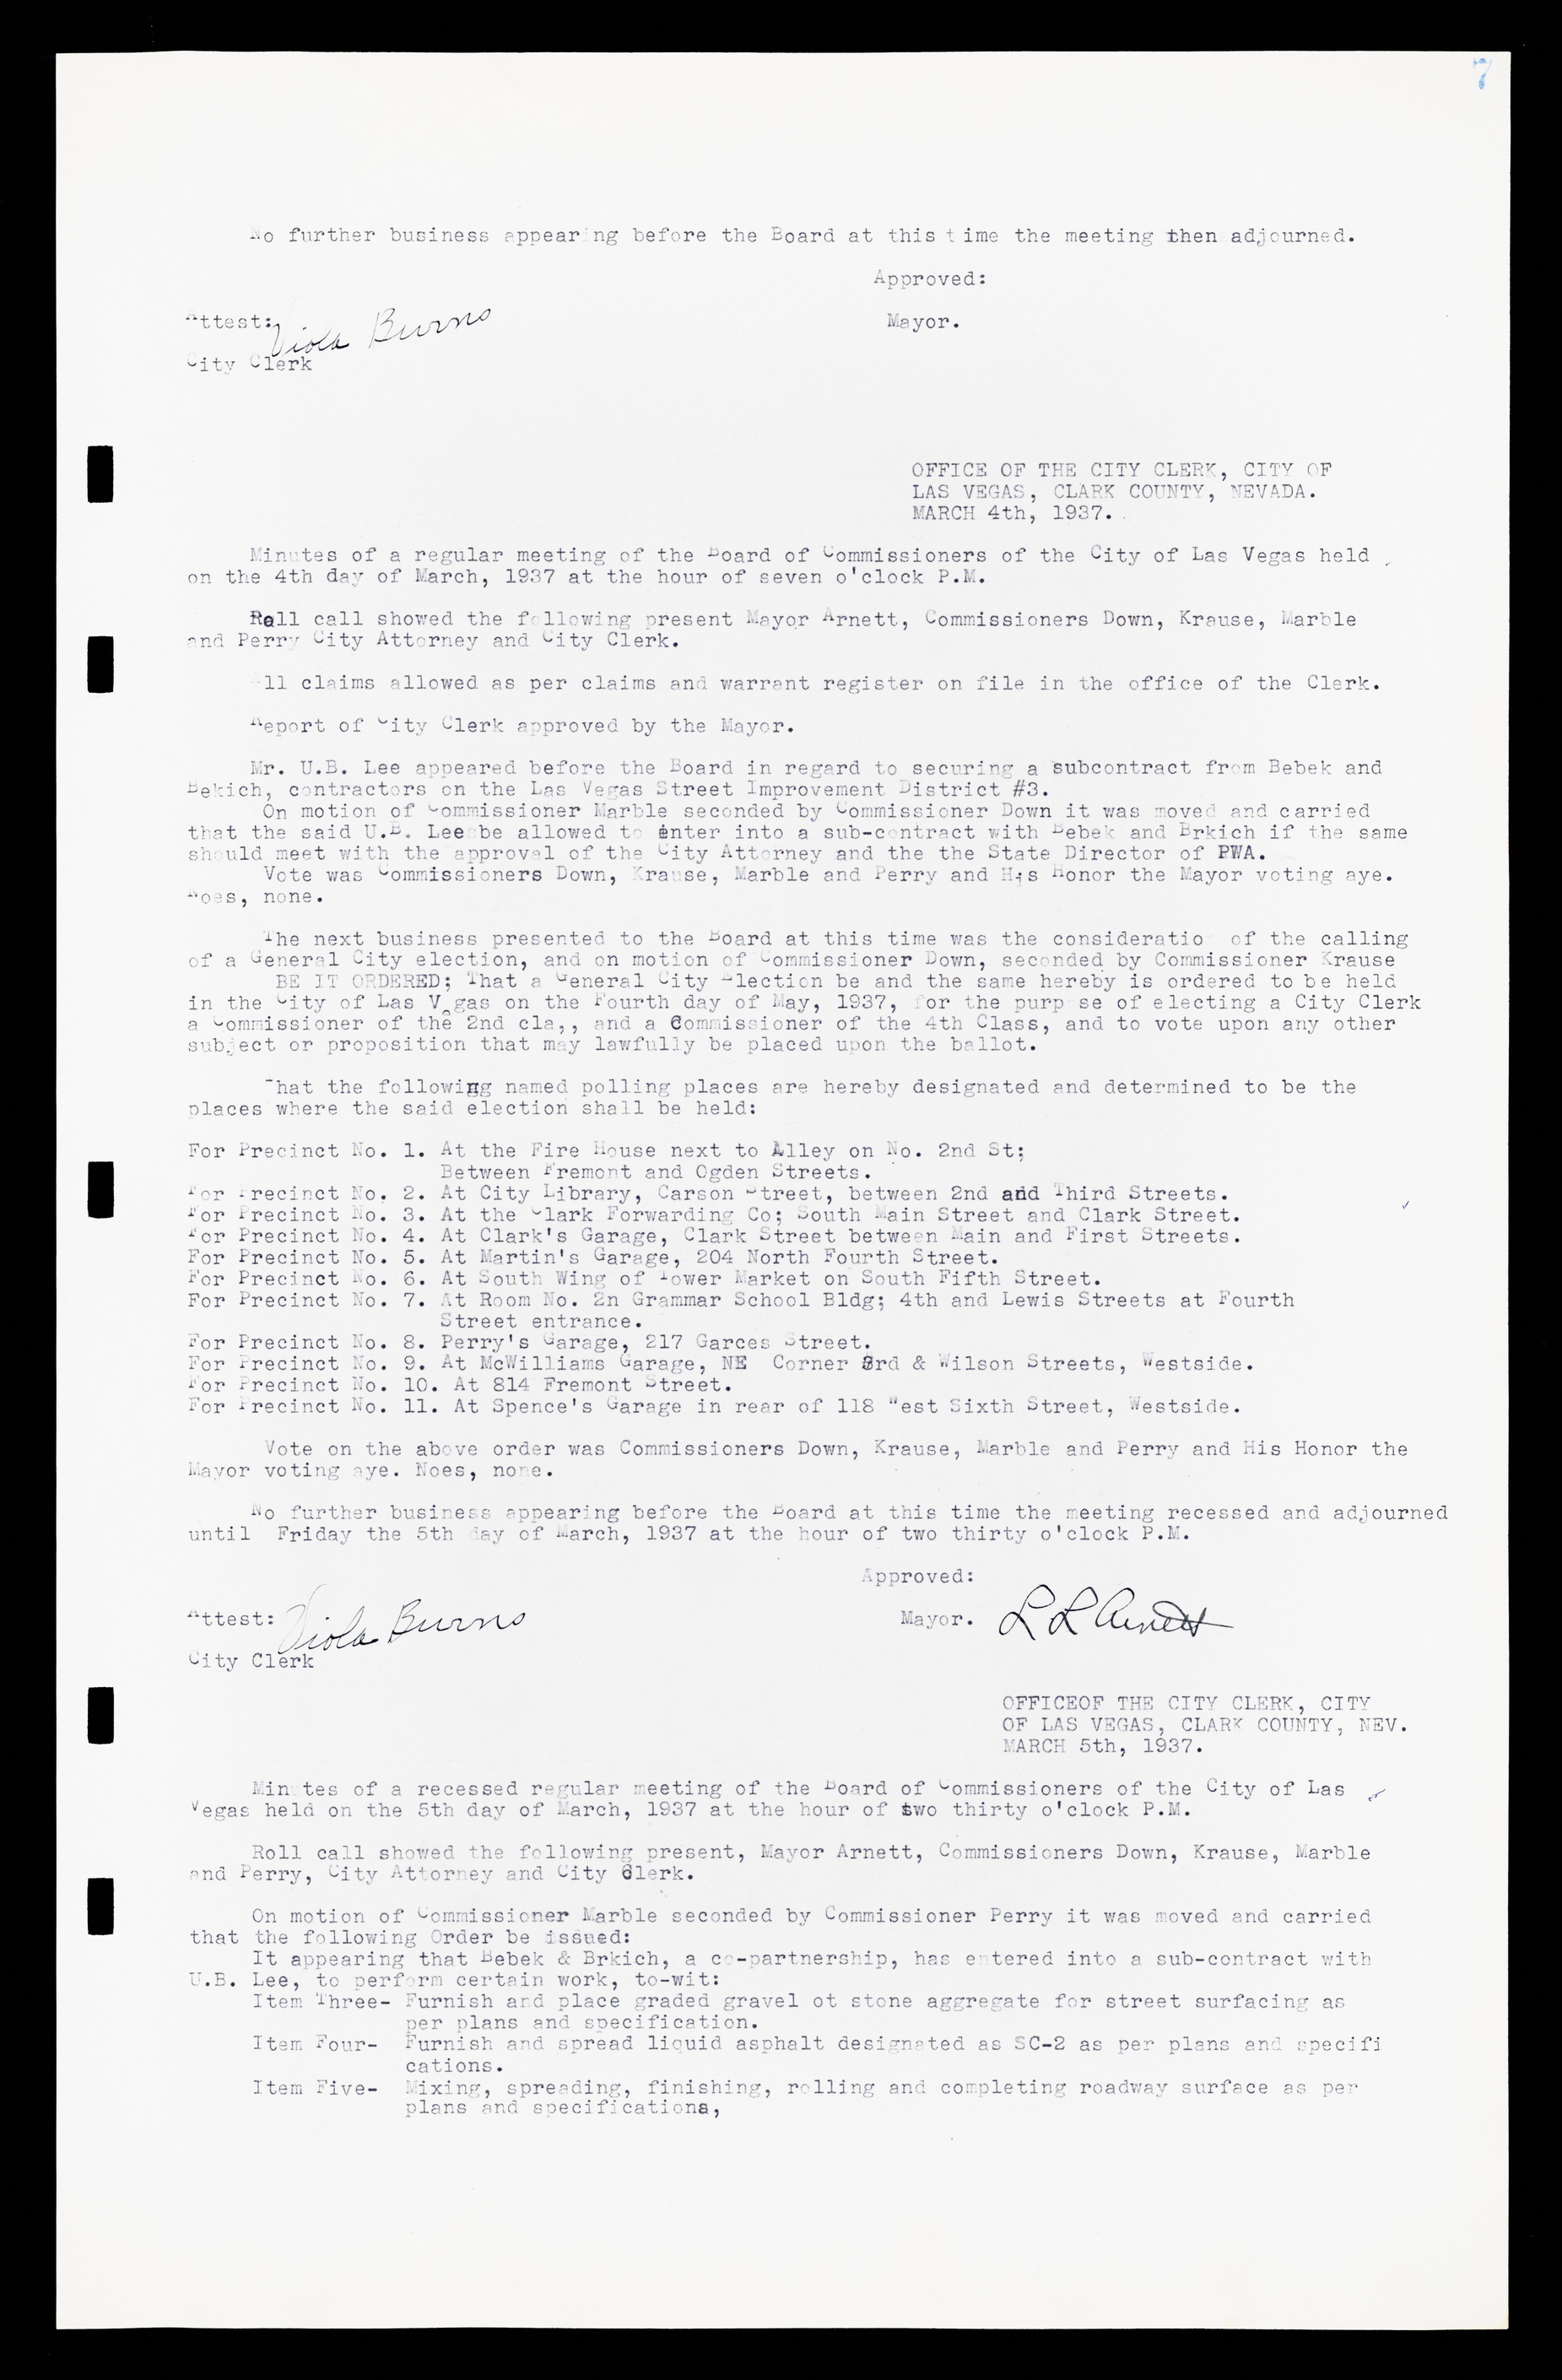 Las Vegas City Commission Minutes, February 17, 1937 to August 4, 1942, lvc000004-13